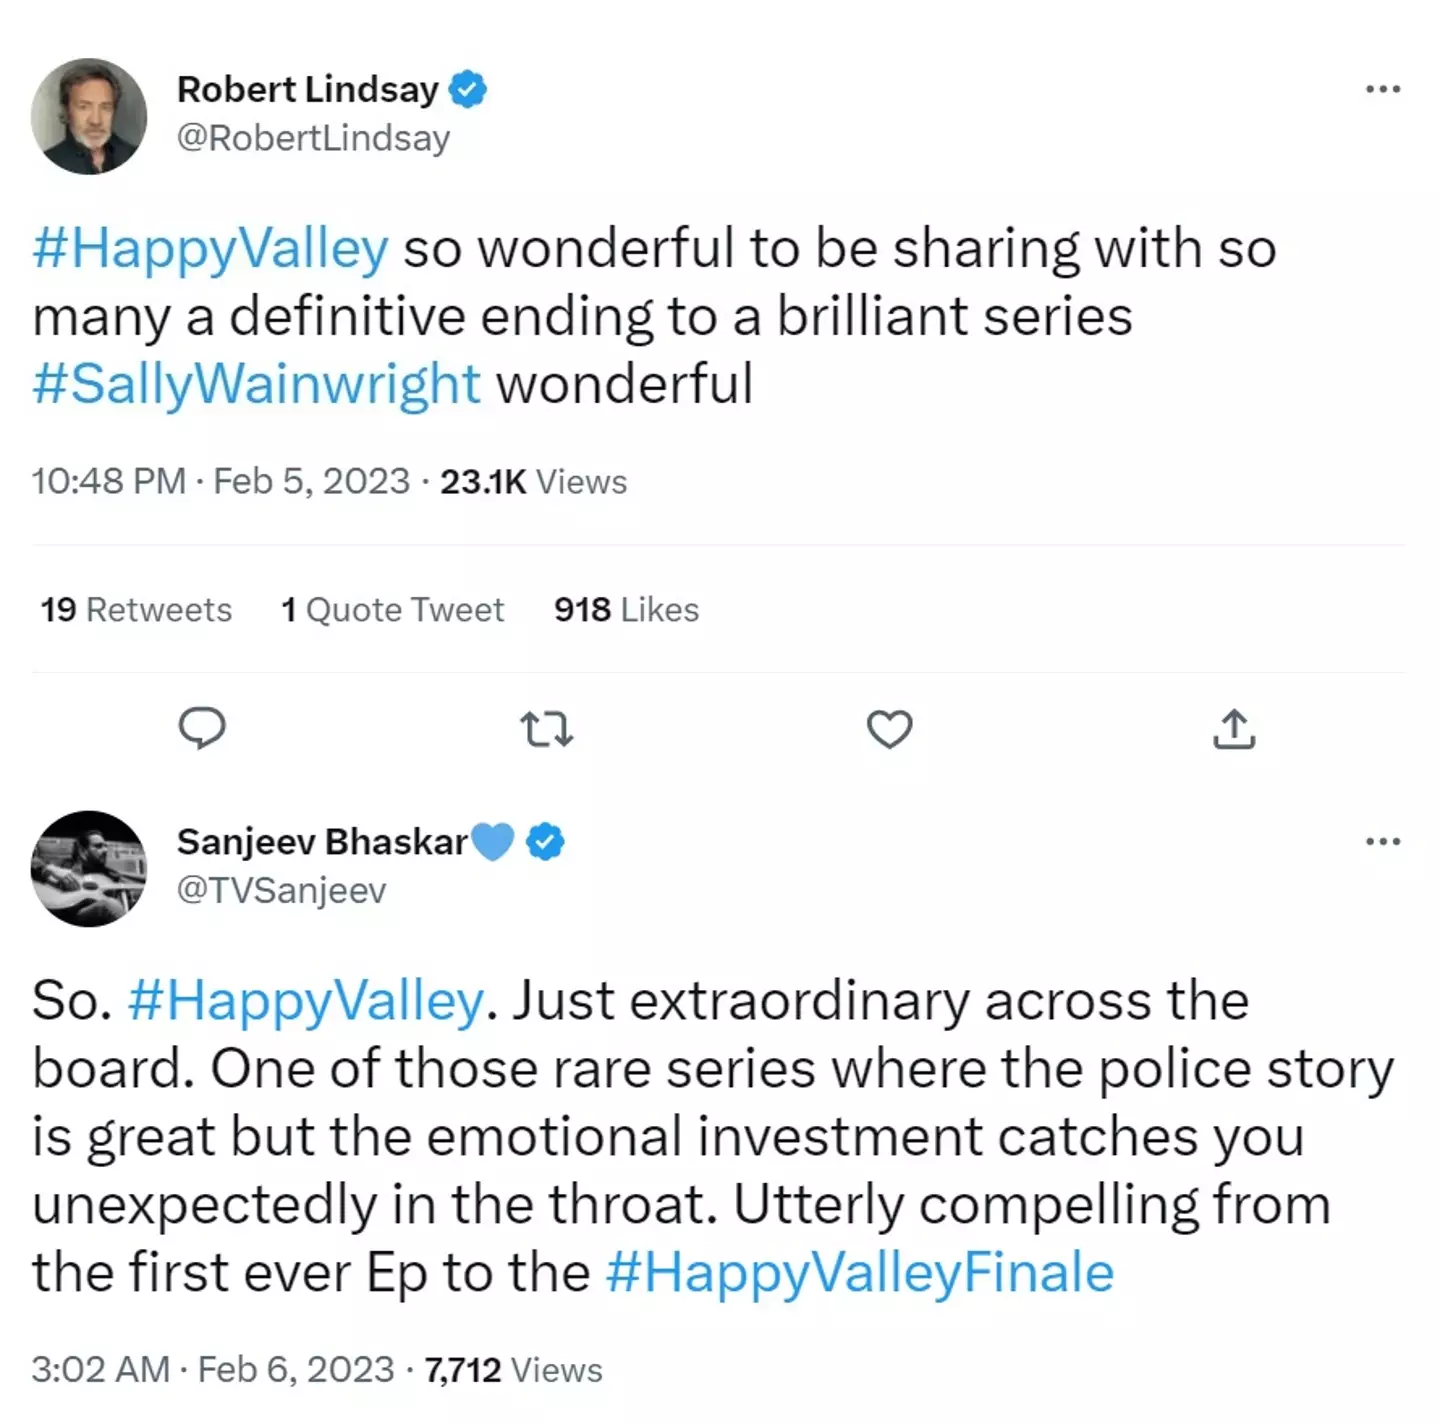 Robert Lindsay and Sanjeev Bhaskar loved the way Happy Valley ended.